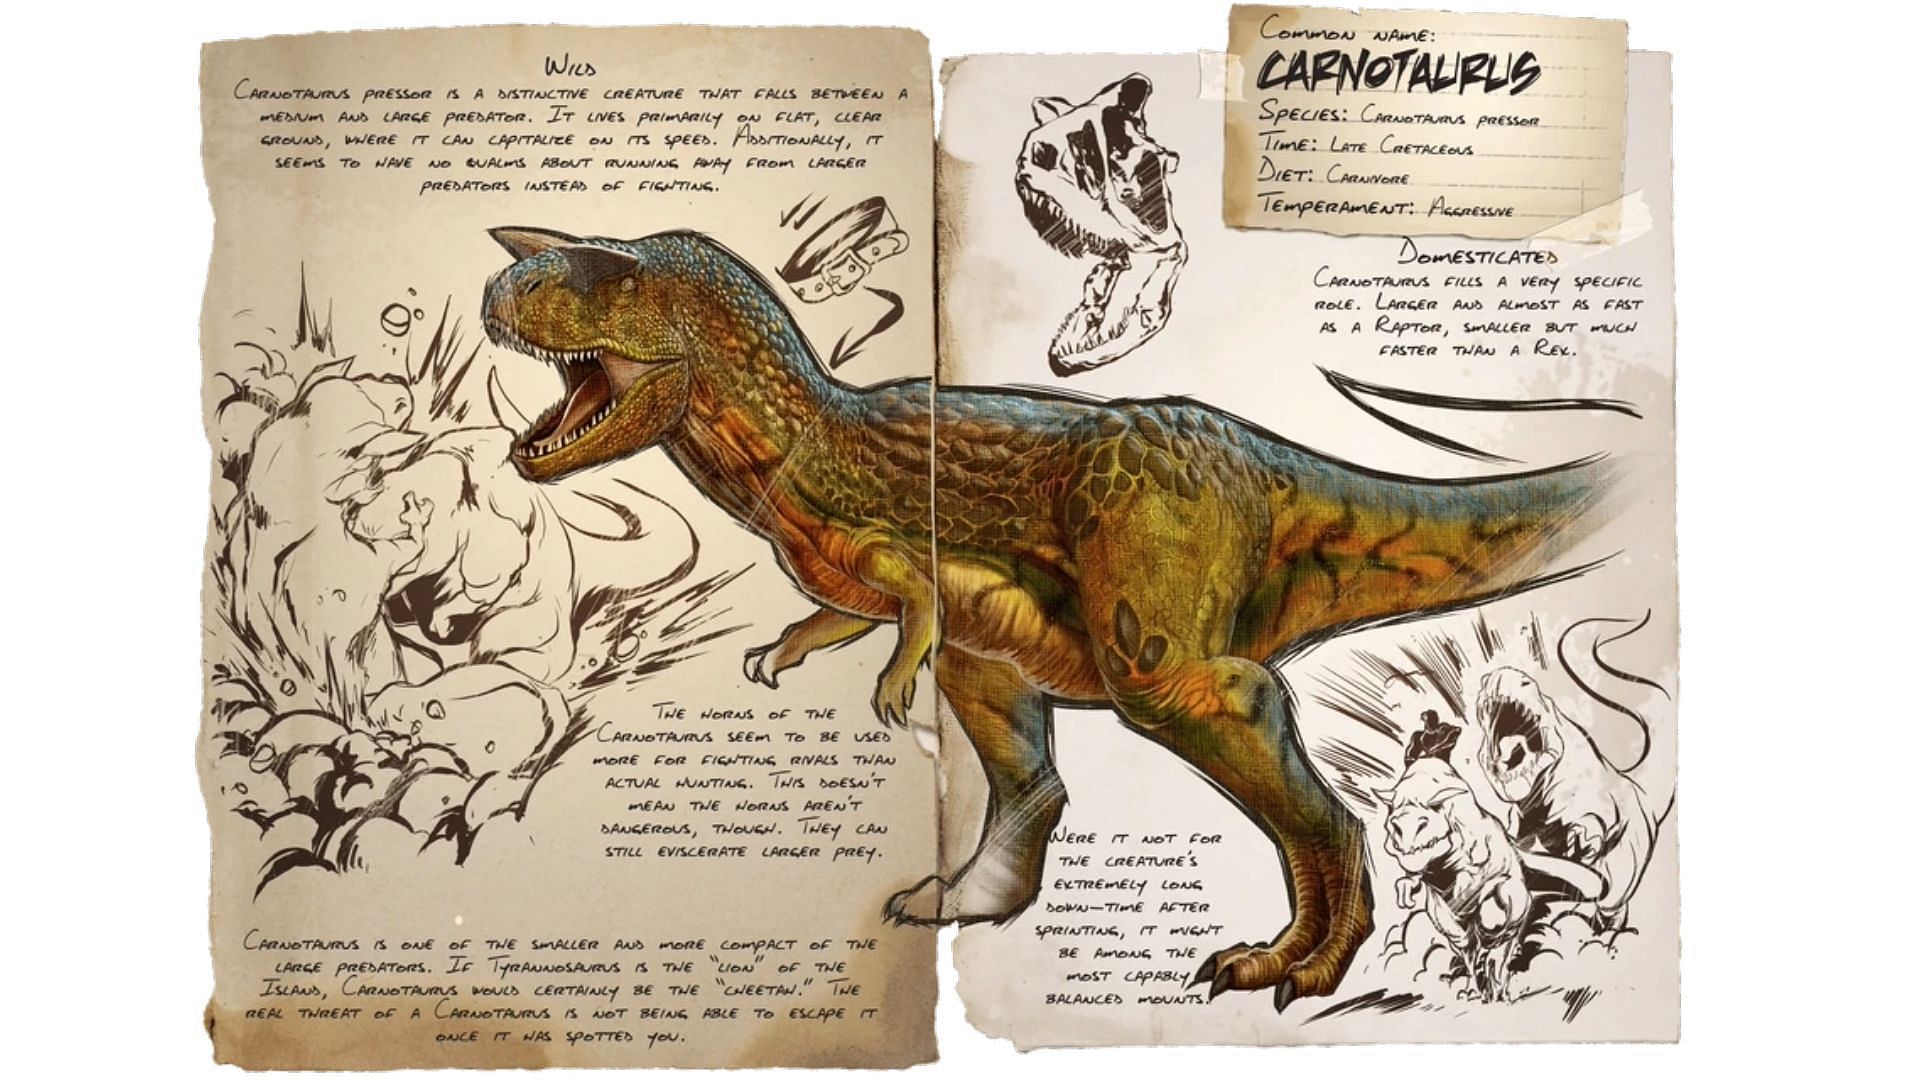 Carnatosaurus in ARK: Survival Ascended